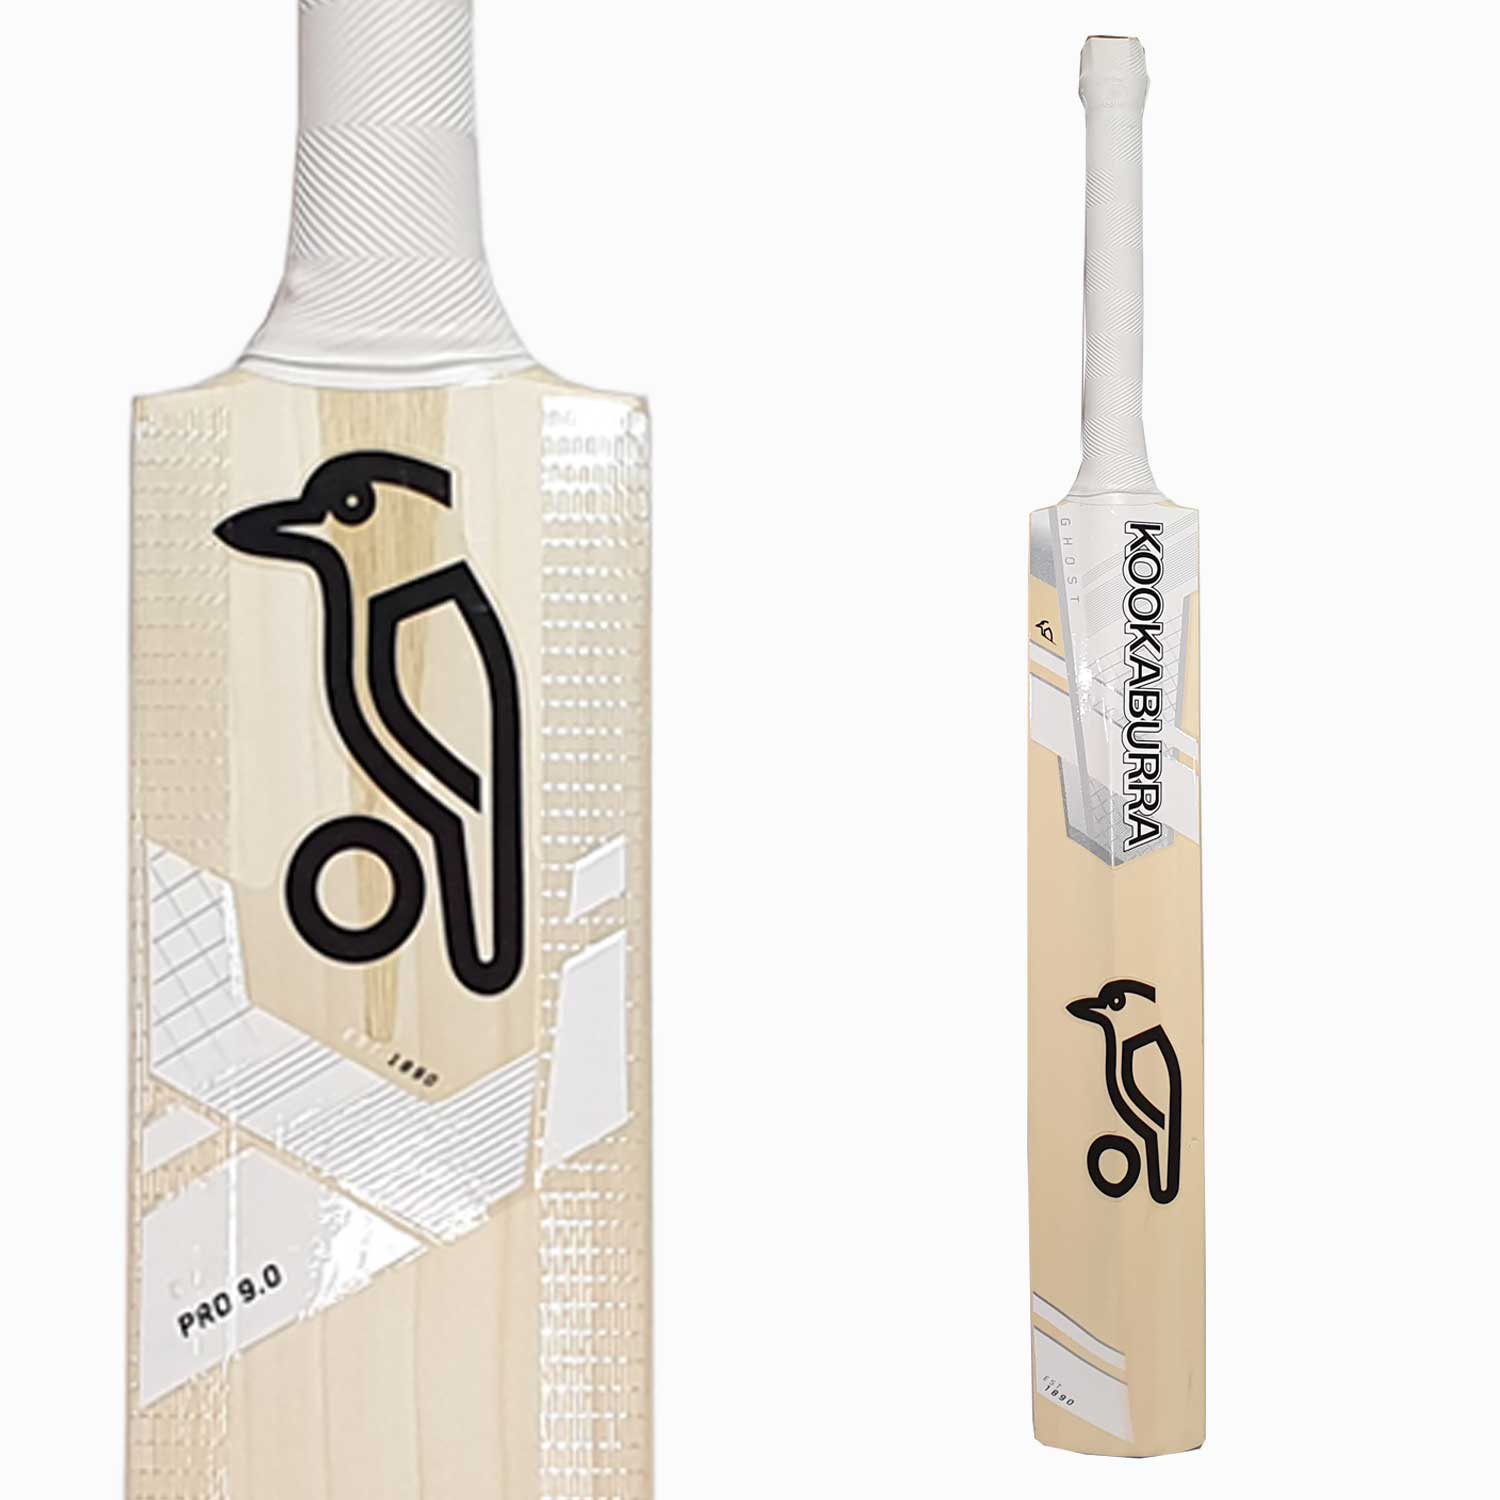 Kookaburra Ghost Pro 9.0 Kashmir Junior Cricket Bat